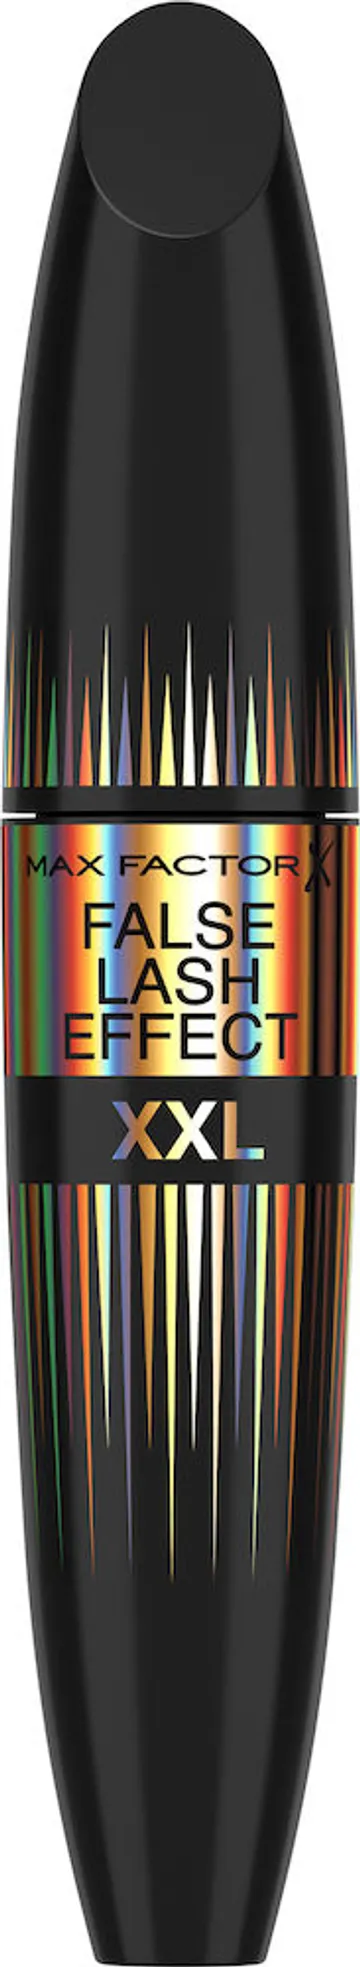 Max Factor False Lash Effect XXL Mascara | Svart